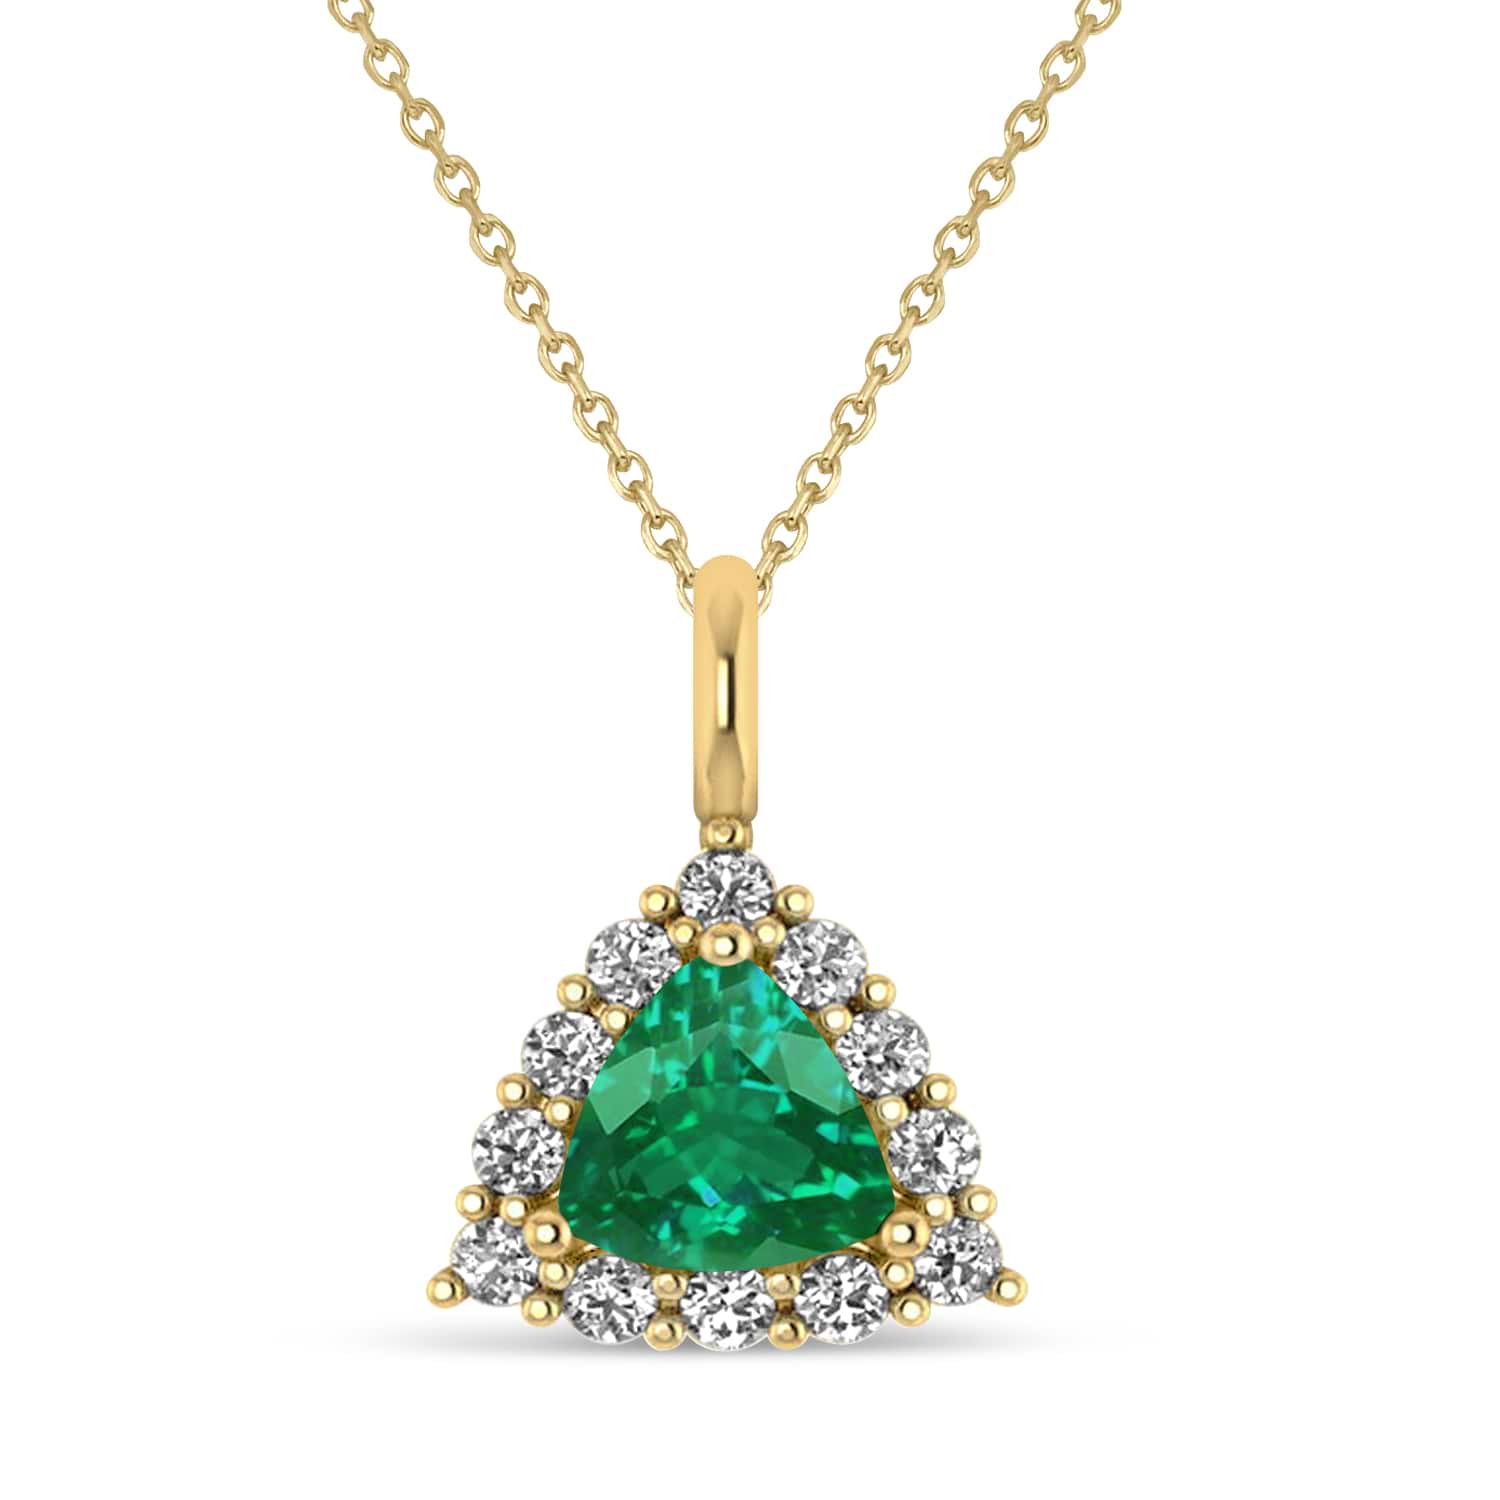 Diamond & Emerald Trillion Cut Pendant Necklace 14k Yellow Gold (1.28ct)